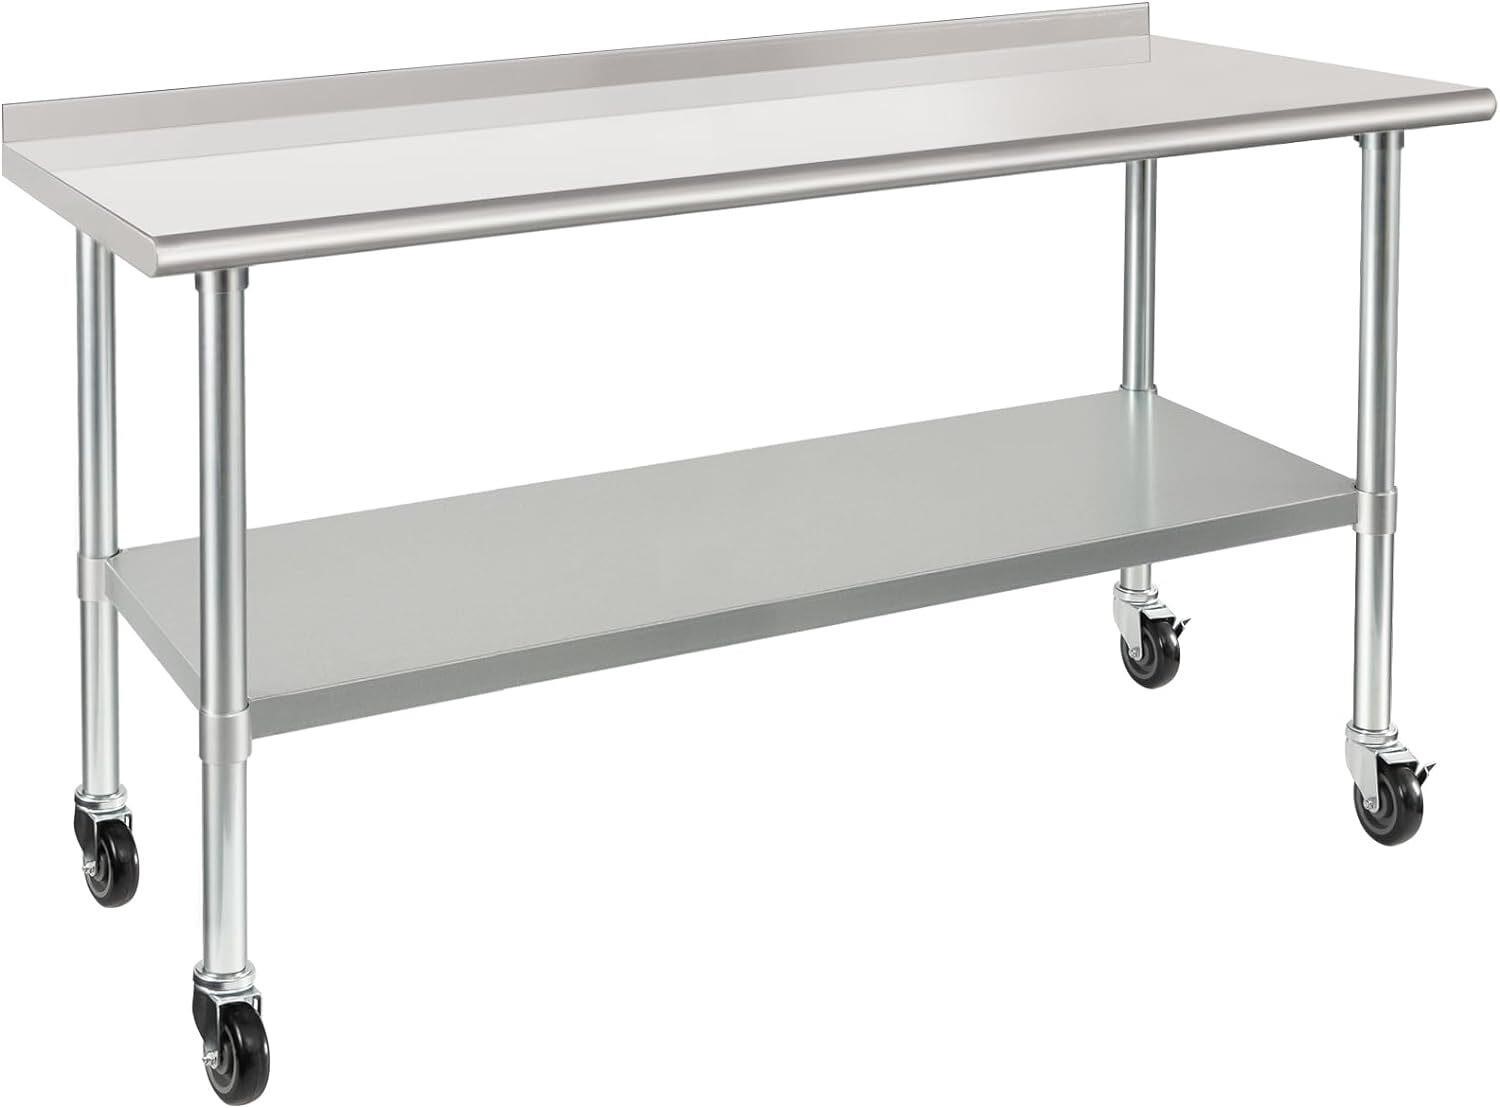 HARDURA Stainless Steel Table 24 x 60